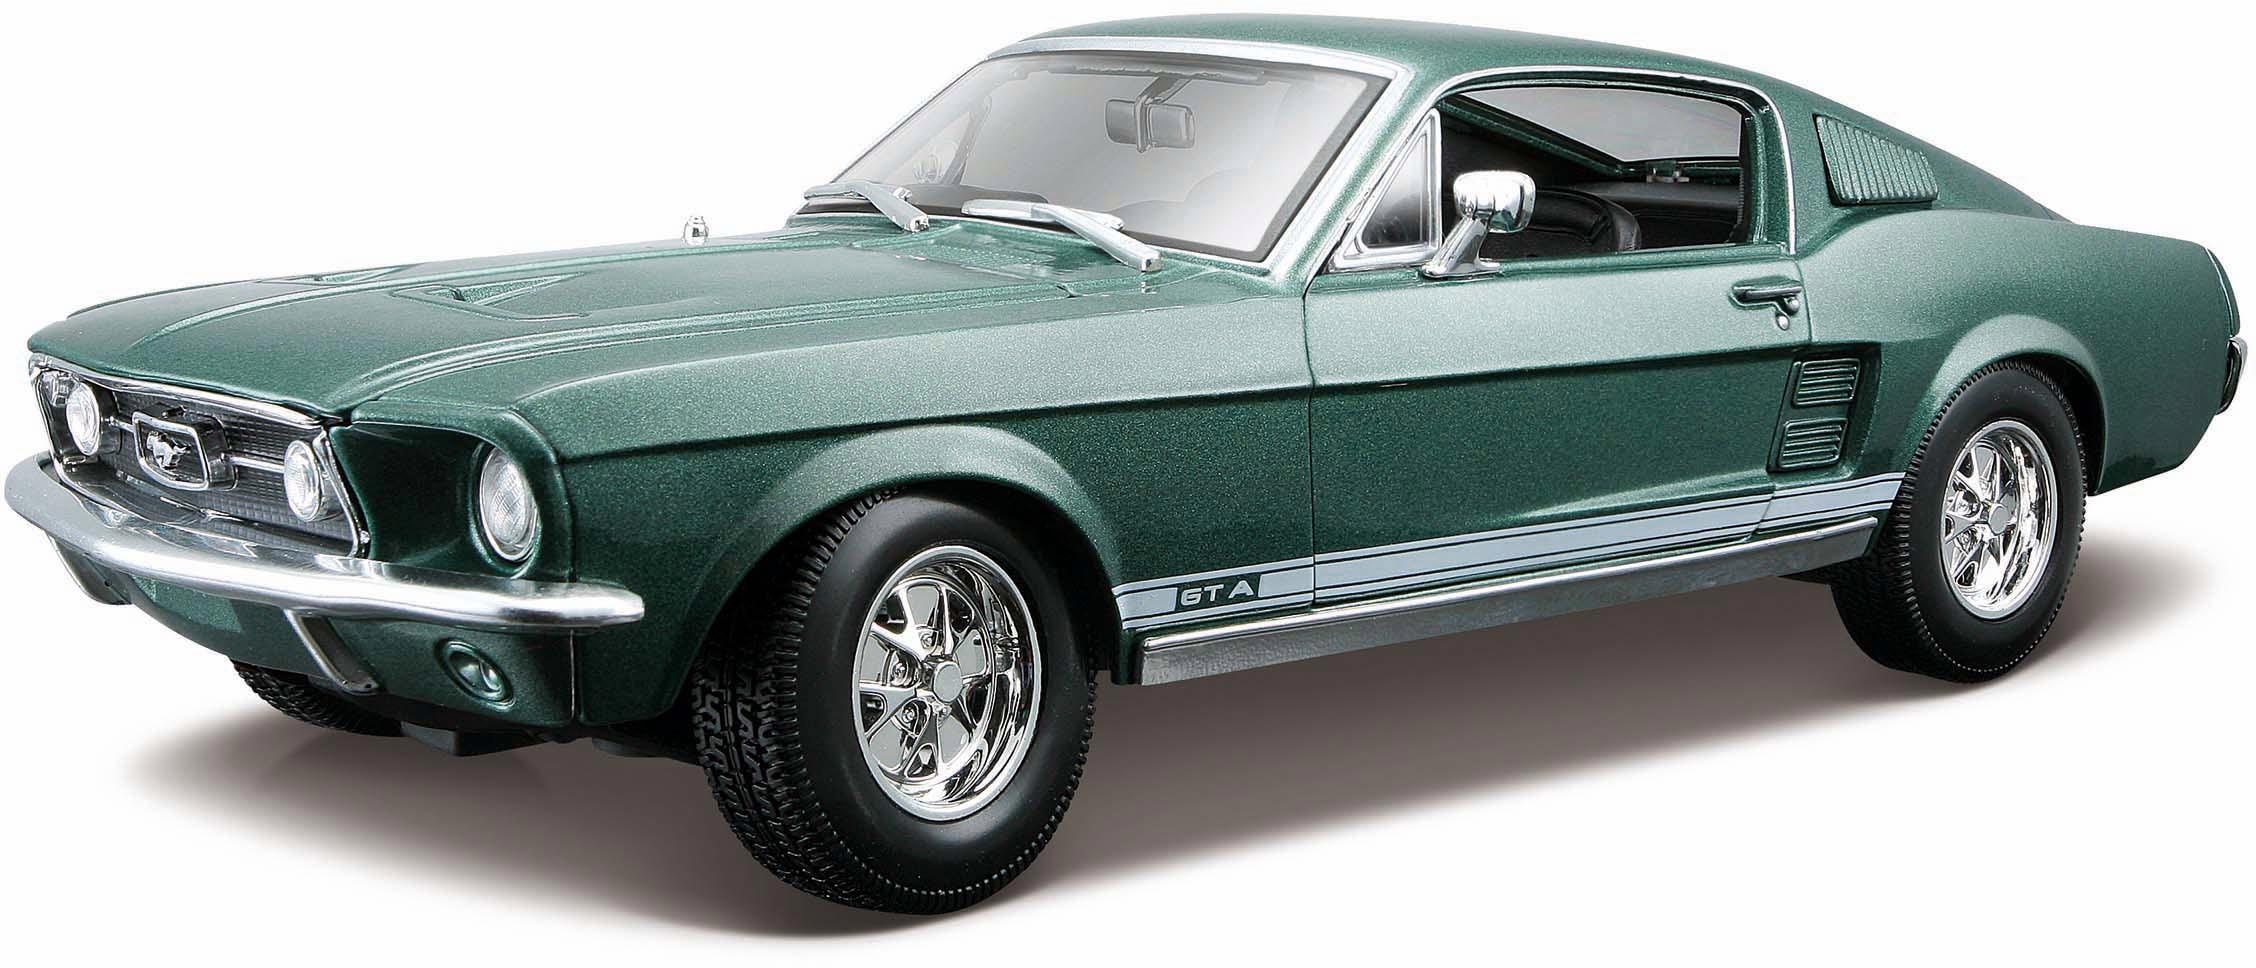 Maisto® Sammlerauto »Ford Mustang GTA Fliessheck67, 1:18, grün«, 1:18, aus Metallspritzguss